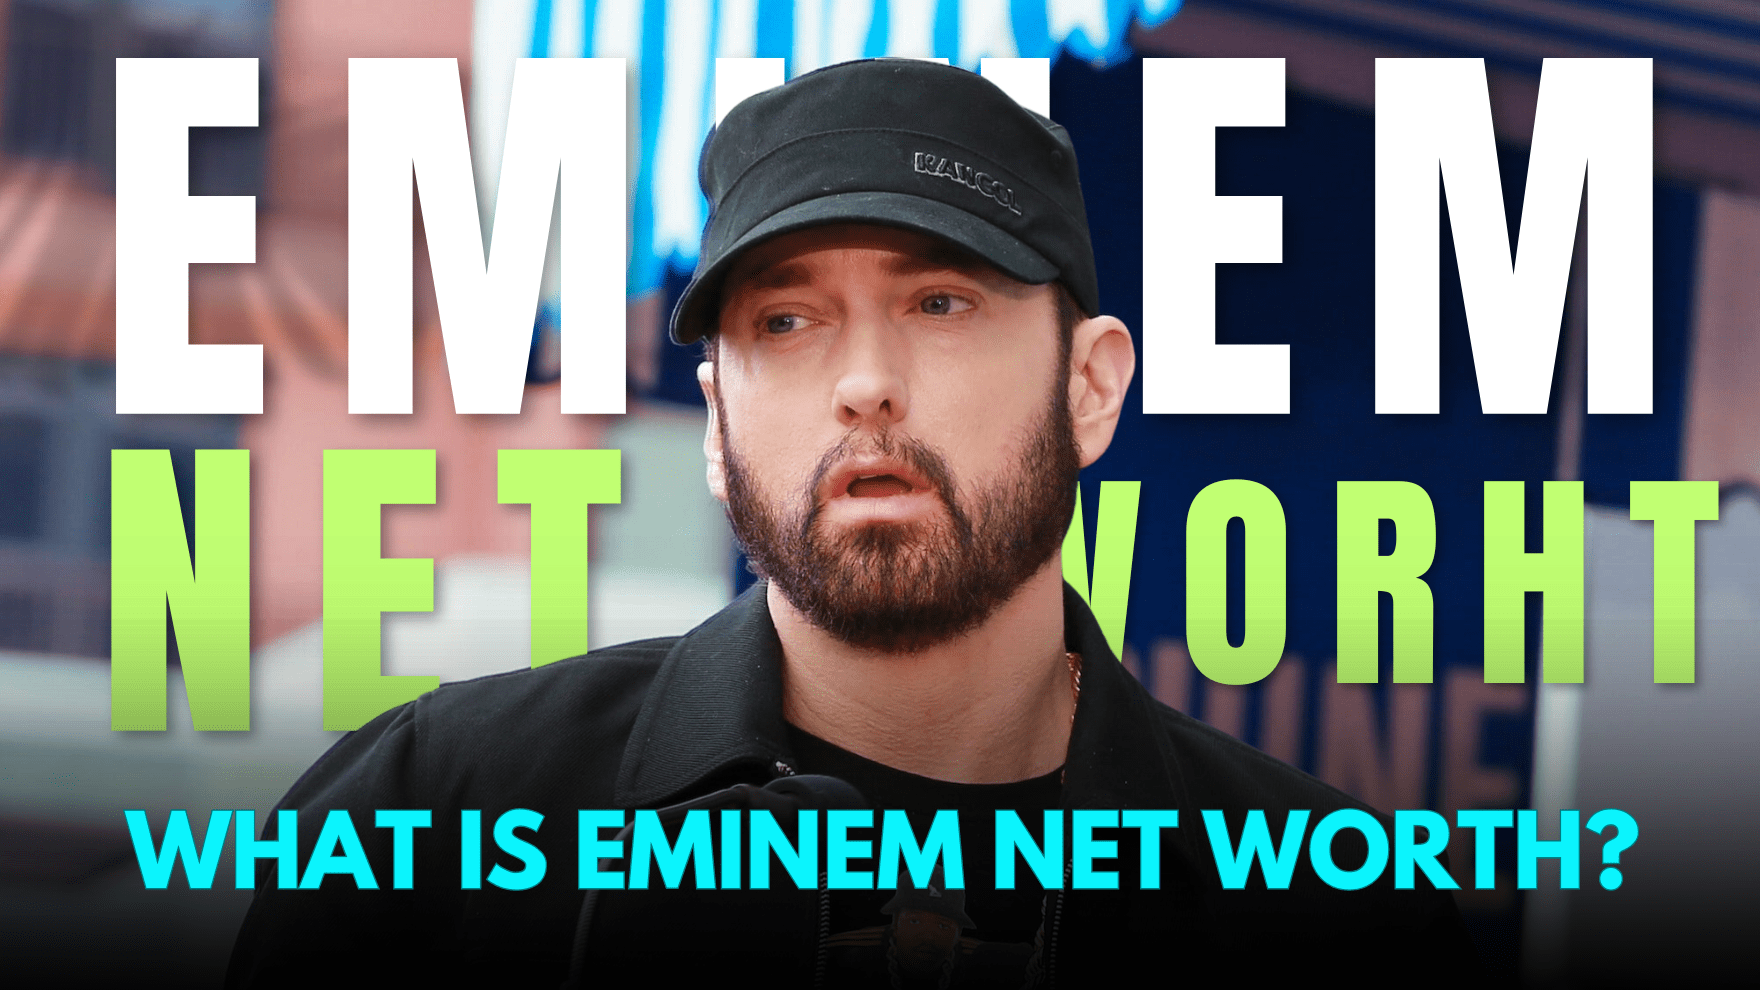 Eminem Net Worth | What is Eminem's Net Worth